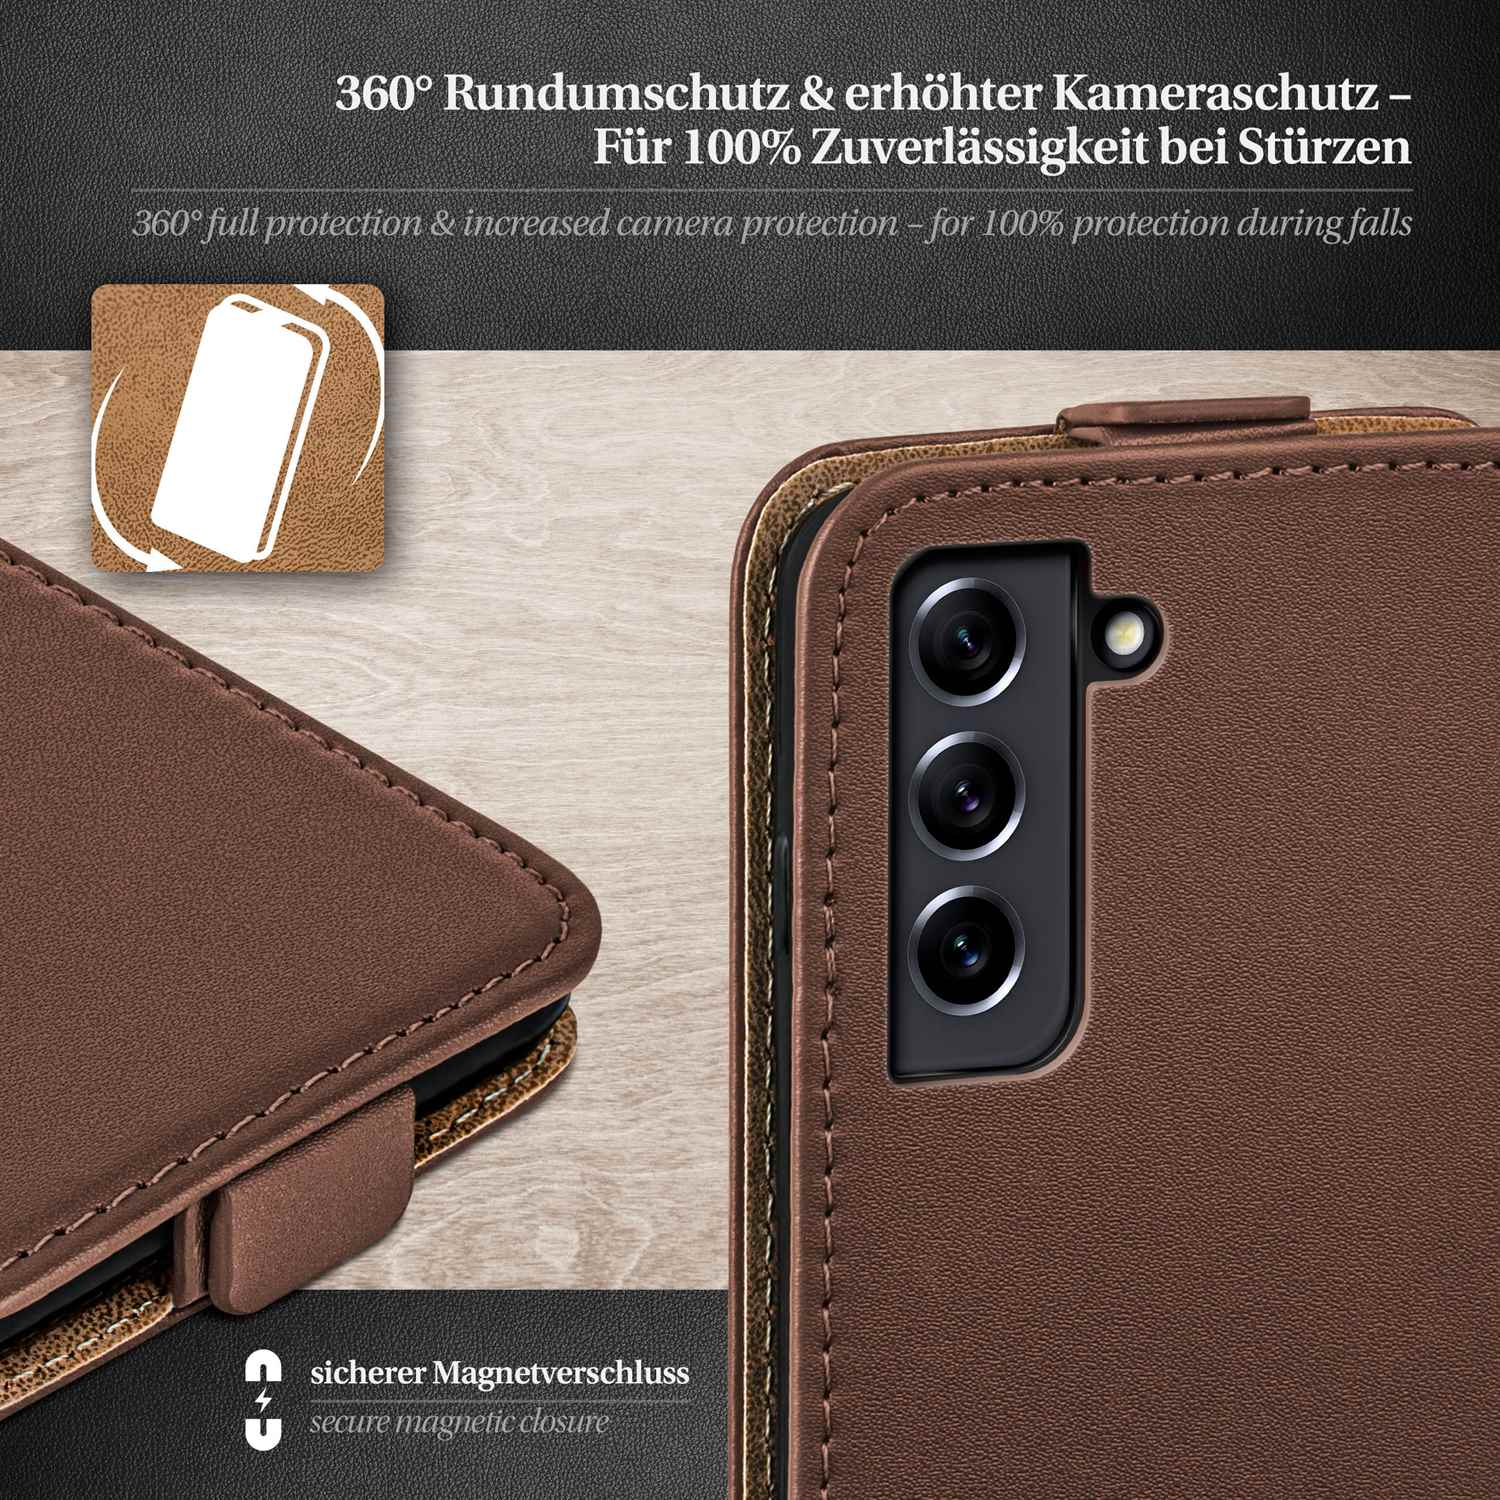 MOEX Flip 5G, FE Galaxy Flip Oxide-Brown Cover, S21 Case, Samsung